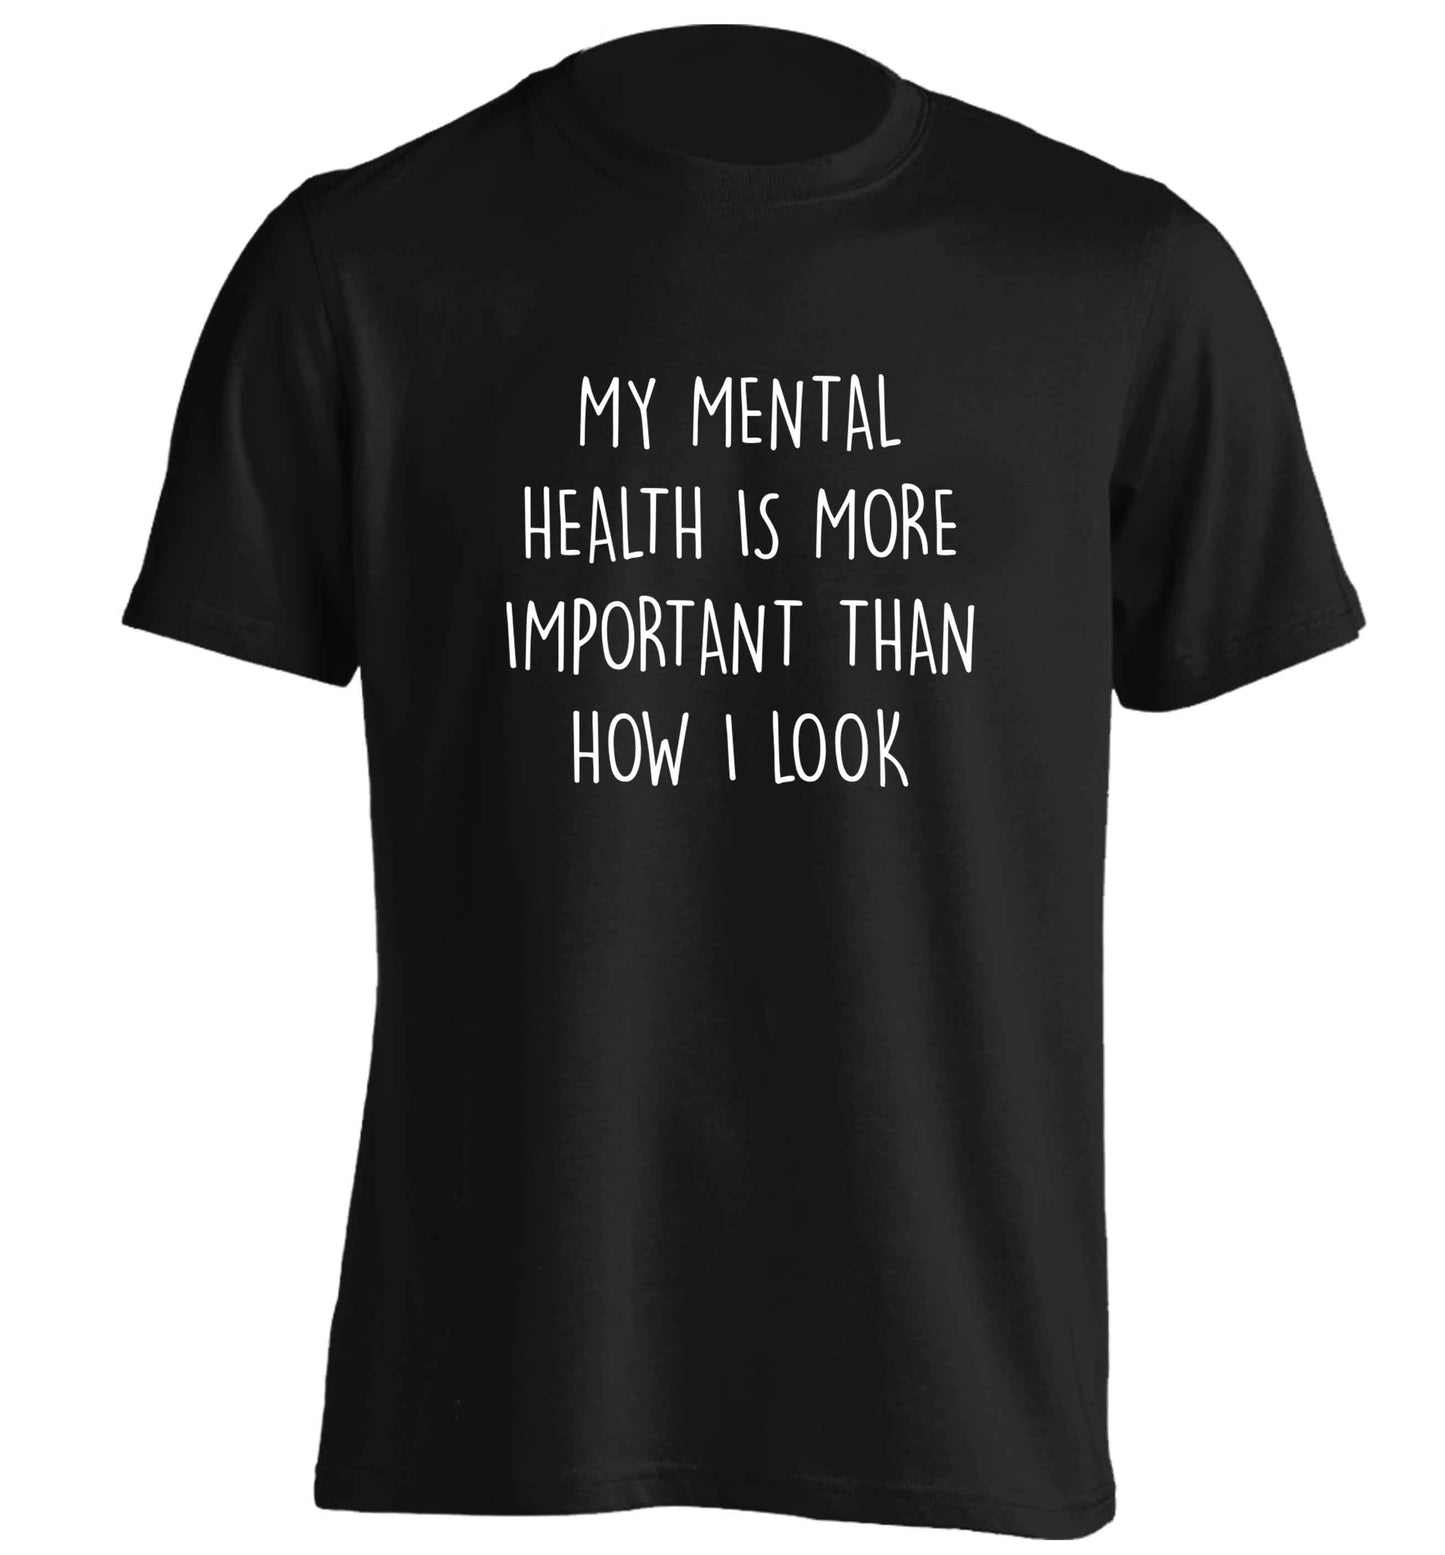 My mental health is more importnat than how I look adults unisex black Tshirt 2XL